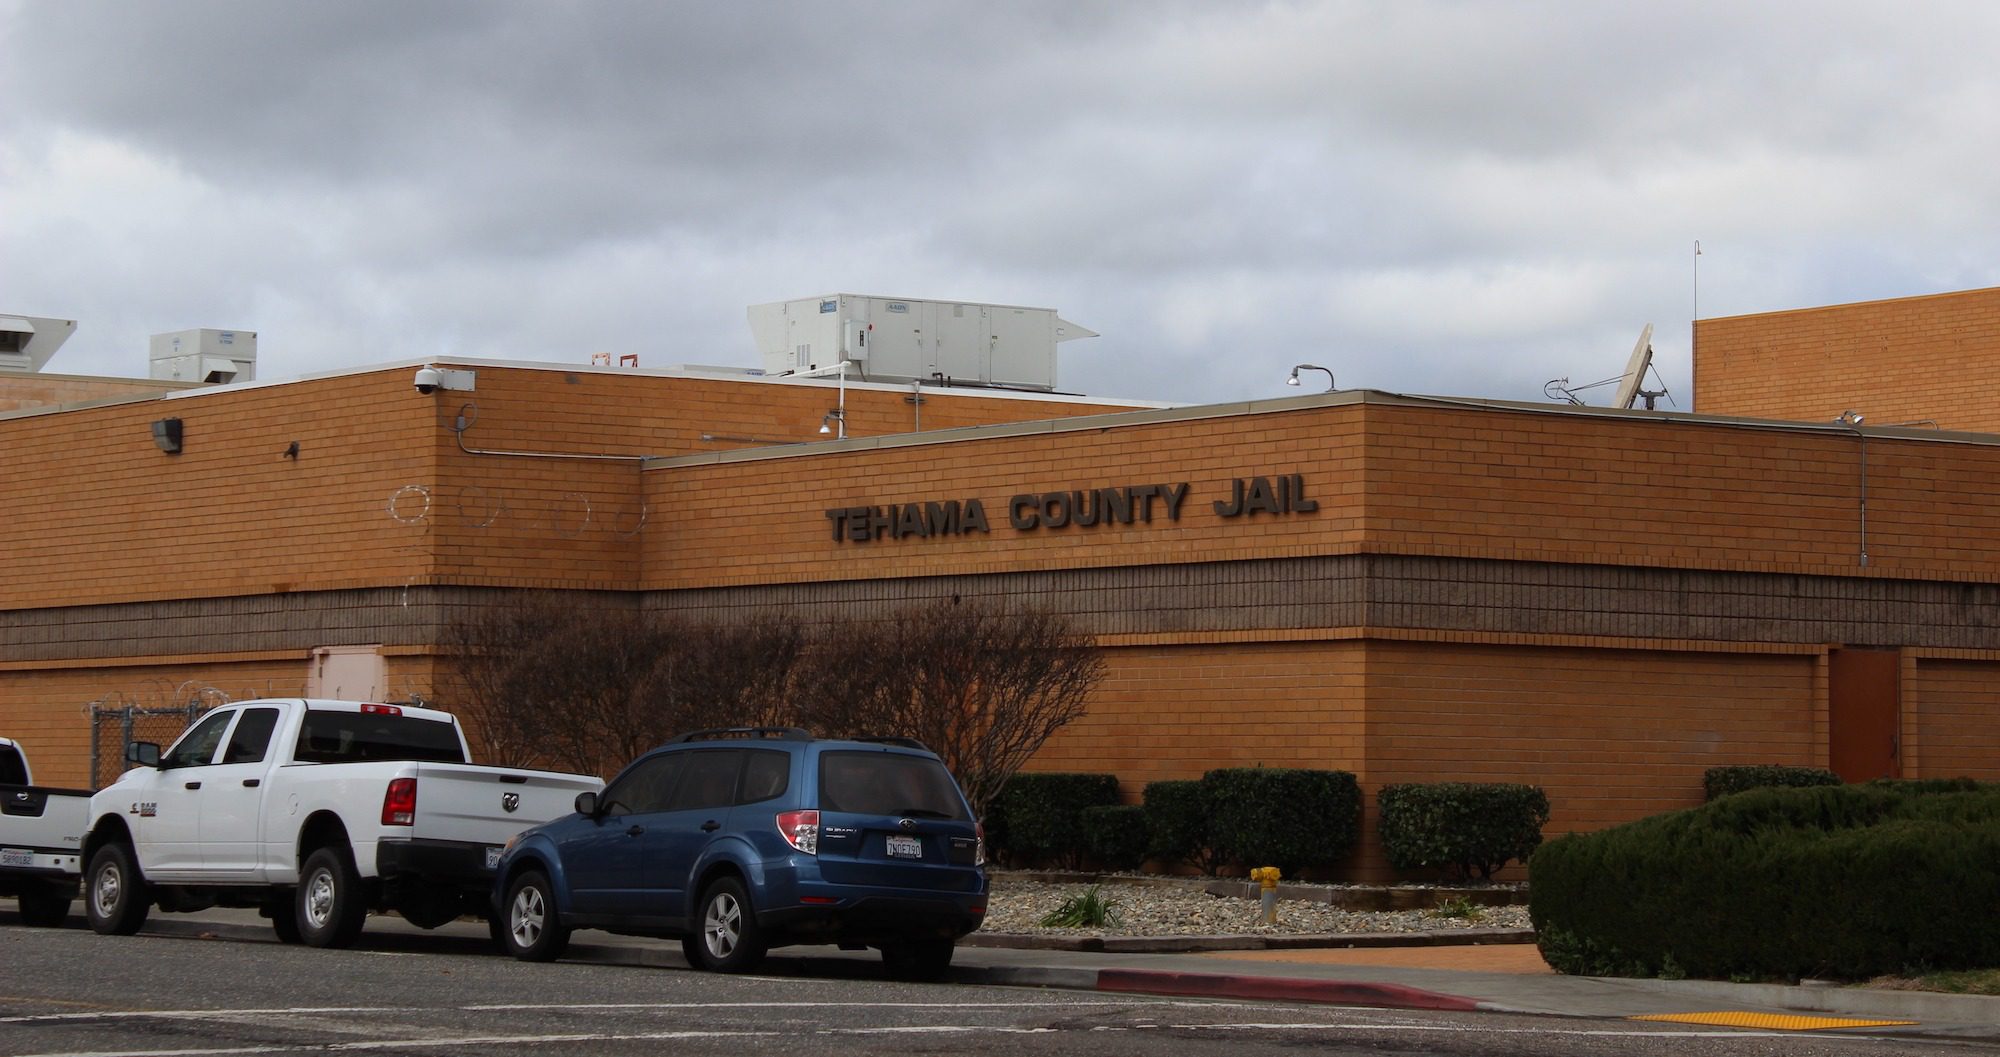 Image of Tehama County Sheriff and Jail